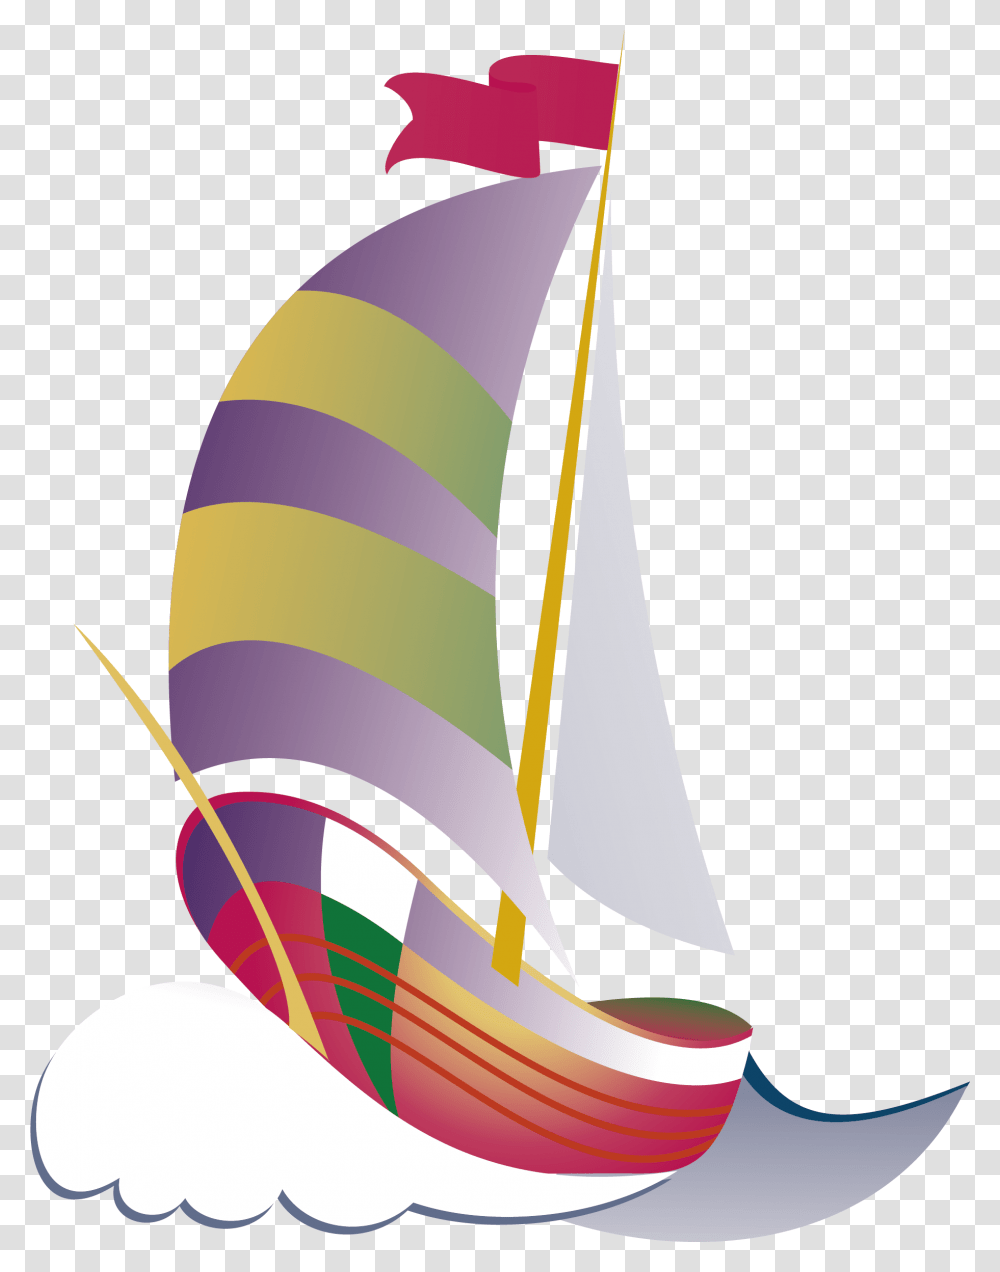 Sailing Ship Graphic Design Illustration Graphics Of Sailboat, Architecture, Building, Light Transparent Png